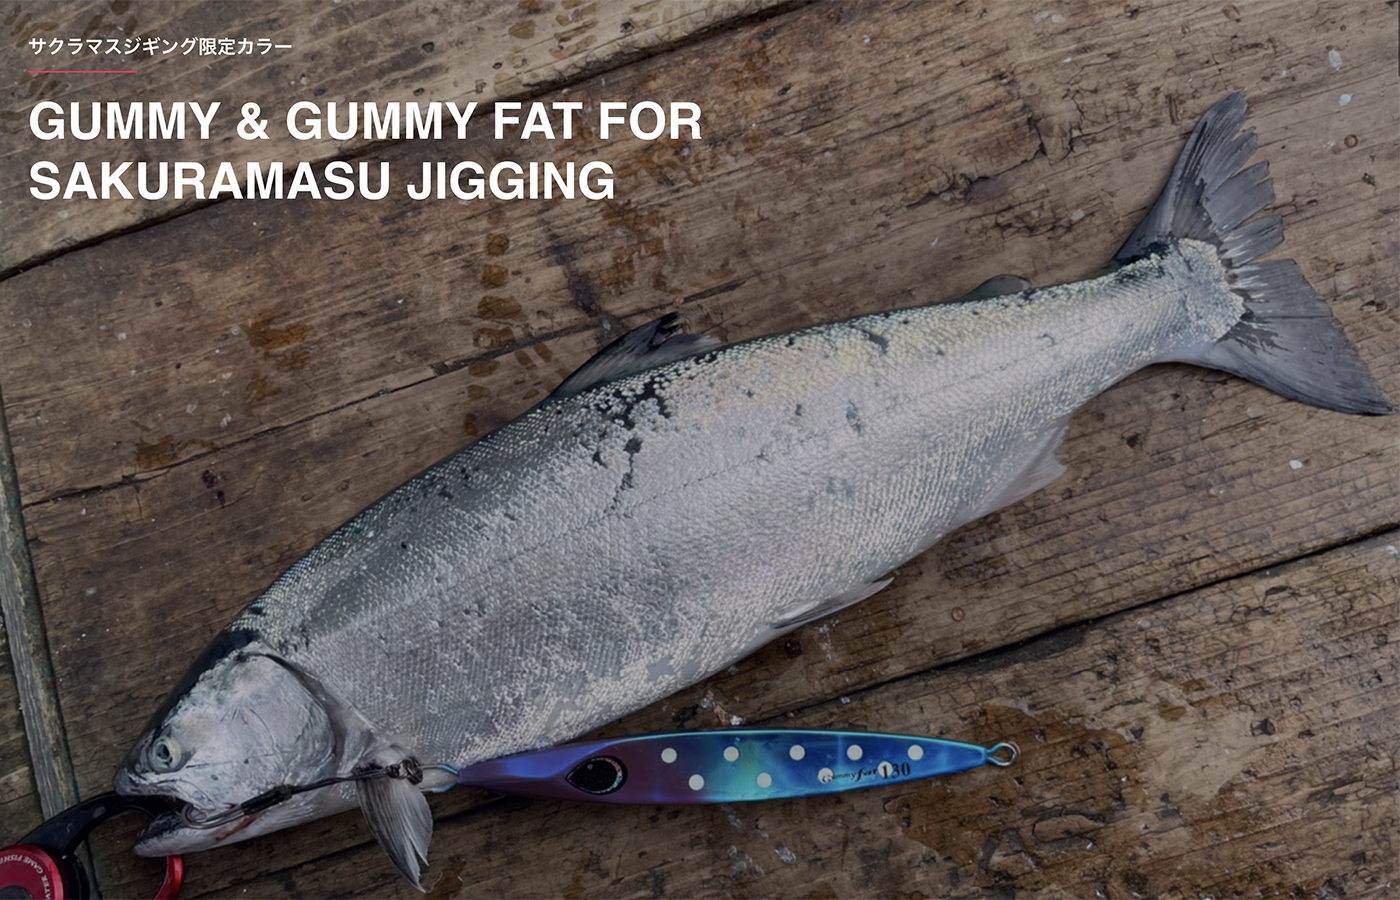 Gummy & Gummy fat for SAKURAMASU Jigging